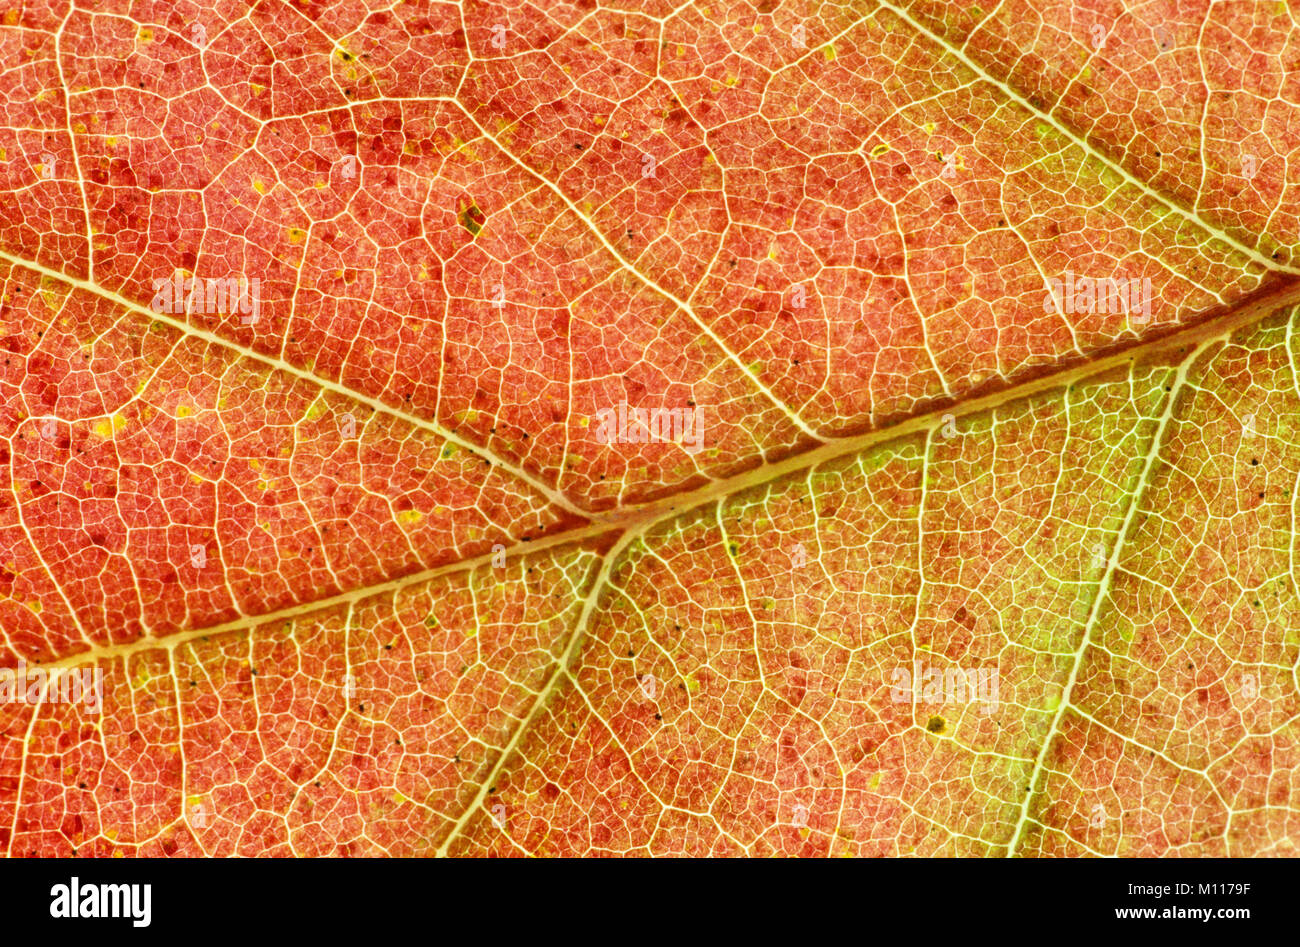 Northern Red Oak, Blatt Detail im Herbst/(Quercus rubra) | Roteiche, Blattdetail im Herbst/(Quercus rubra) Stockfoto